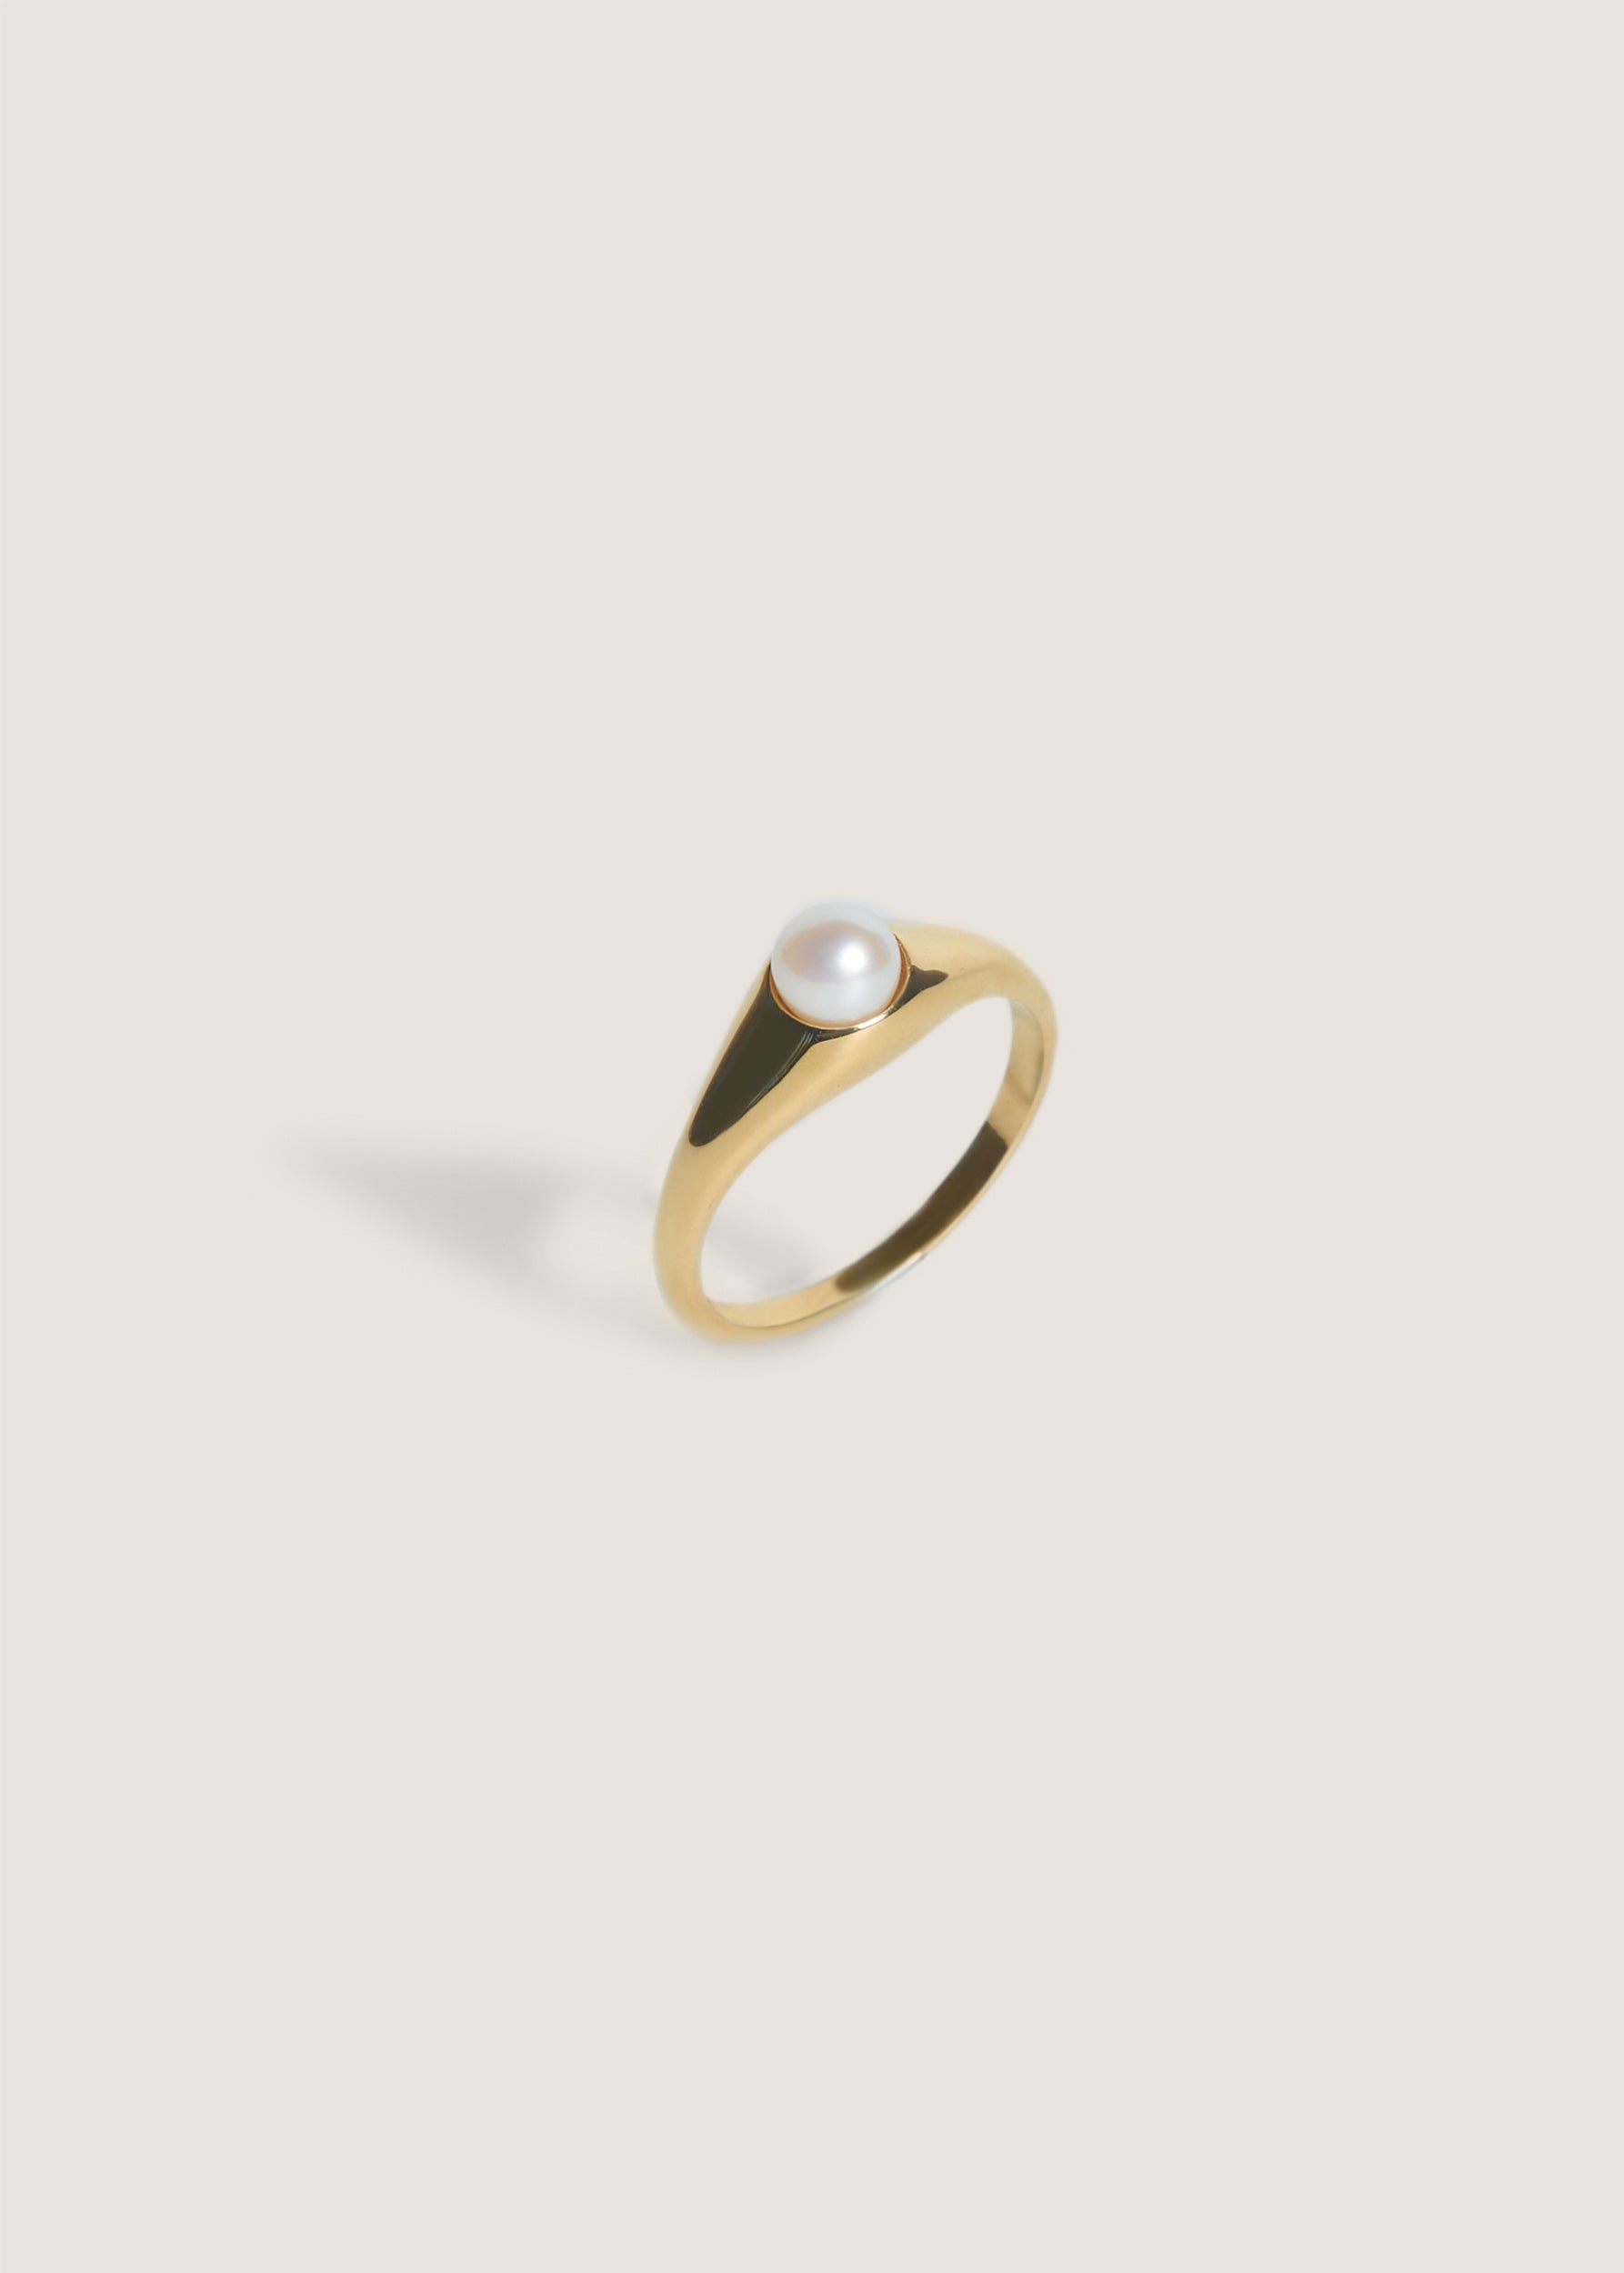 alt="Pearl Signet Ring"